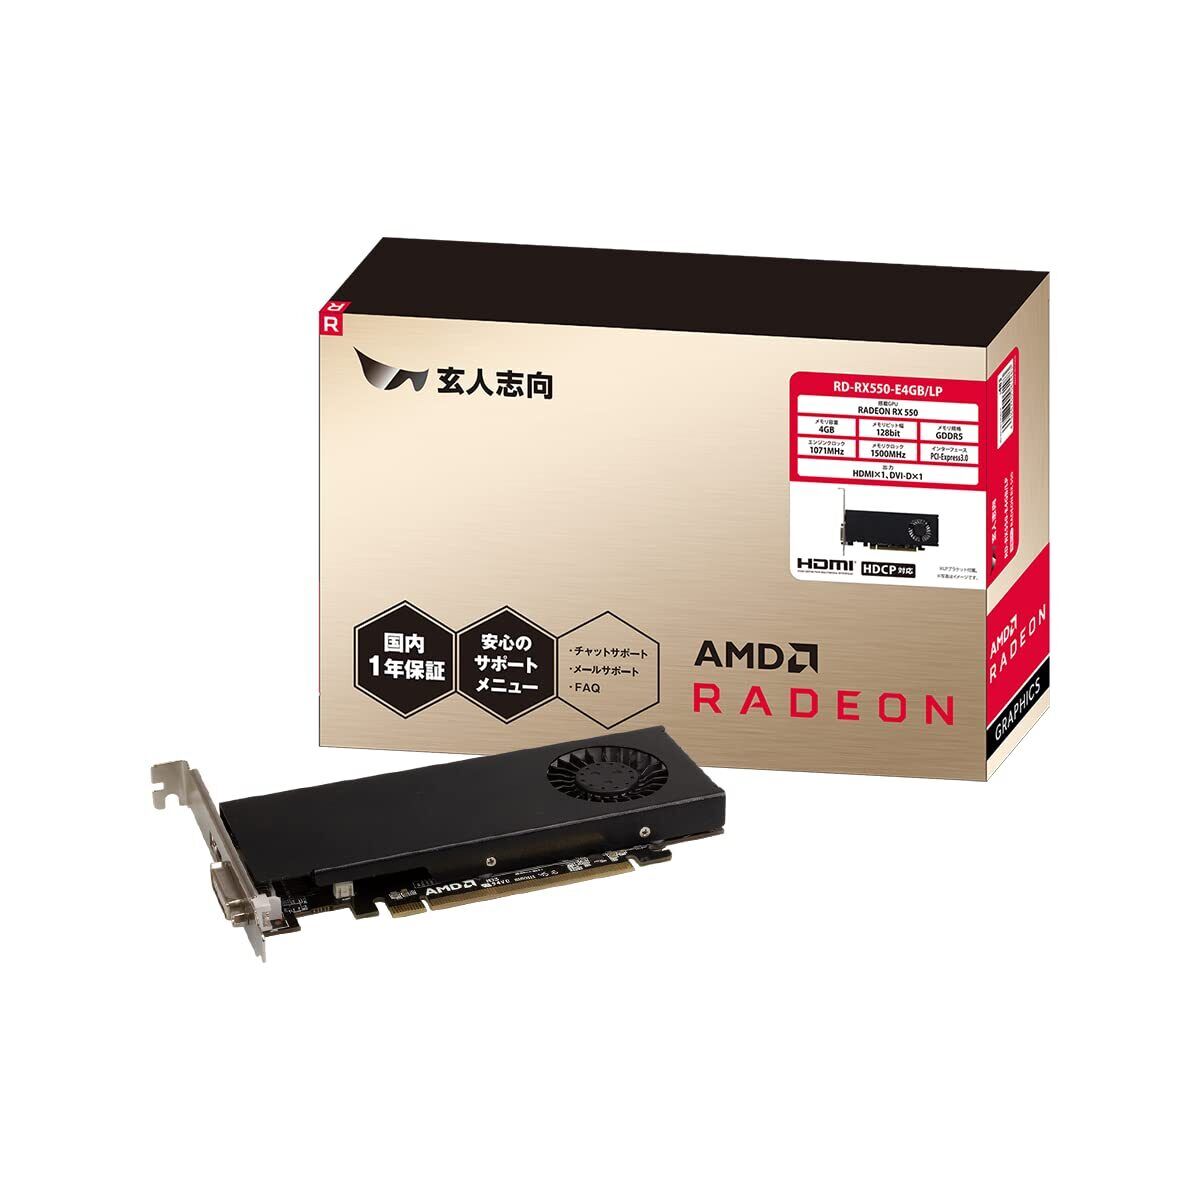 Expert oriented RD-RX550-E4GB/LP Graphics Board AMD Radeon RX550 GDDR5 4 GB